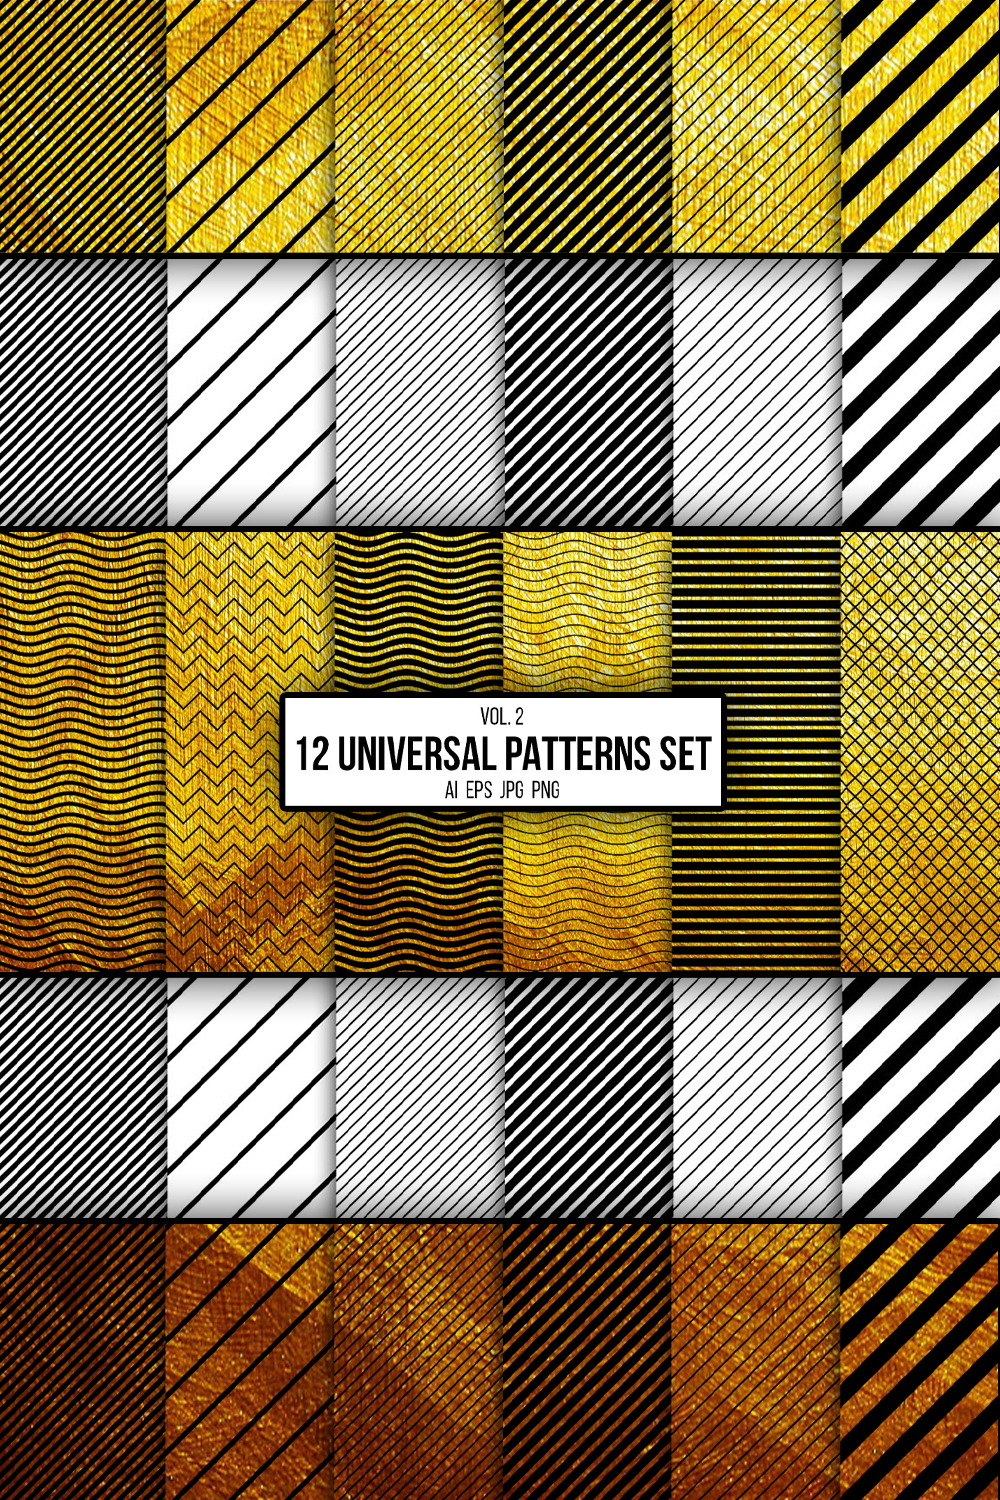 12 universal patterns set of pinterest.